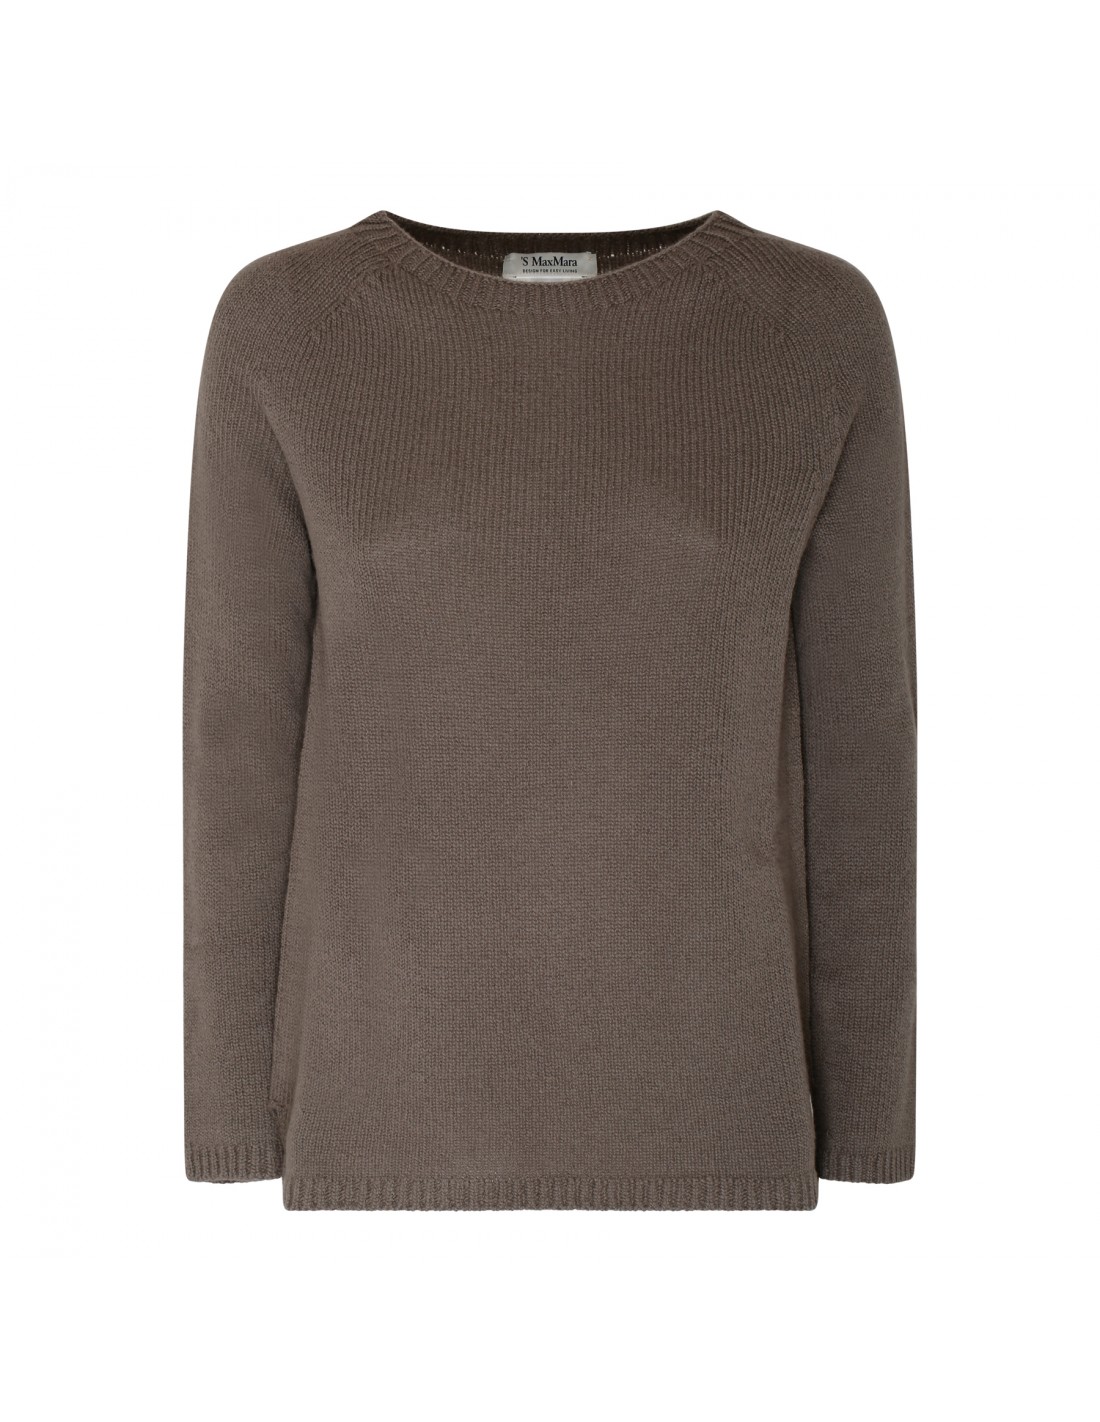 Dove-hue wool blend sweater